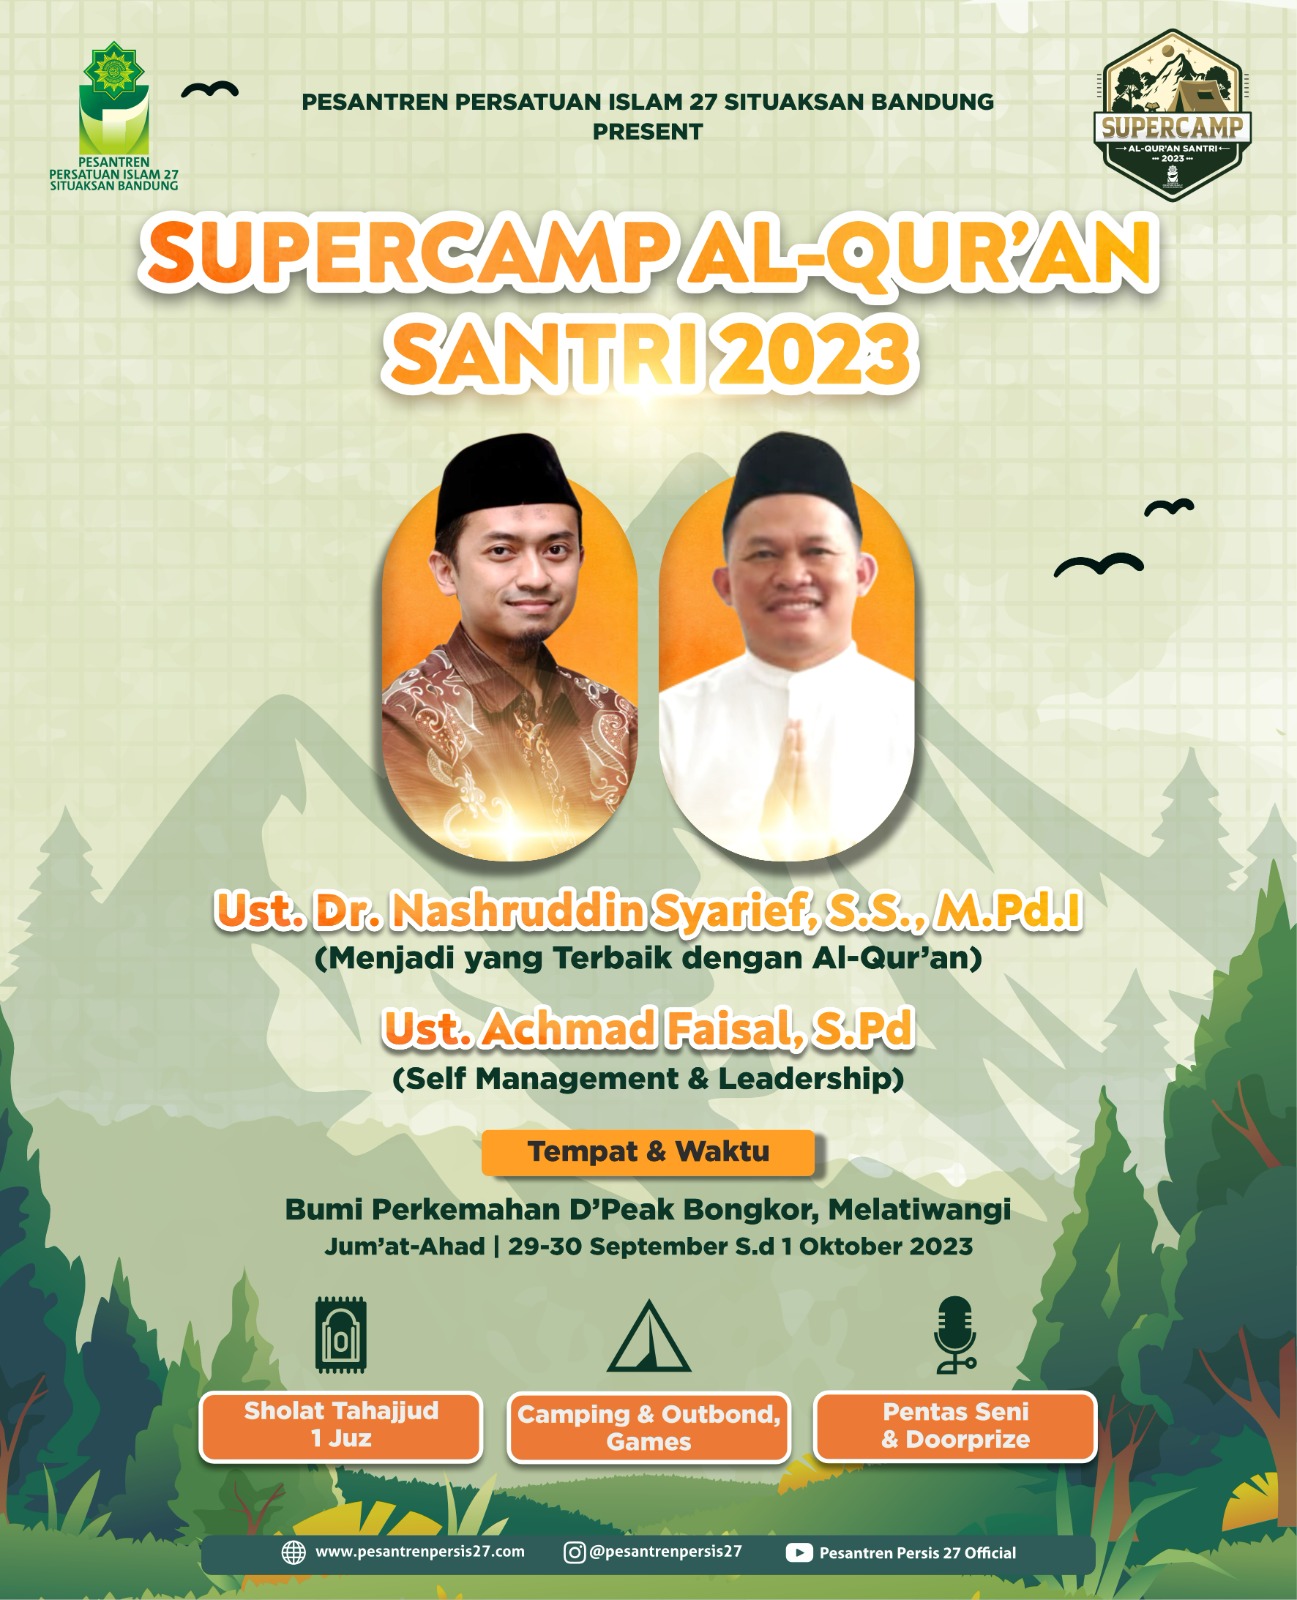 Cooming soon, Pemateri Supercamp al-Qur’an 2023